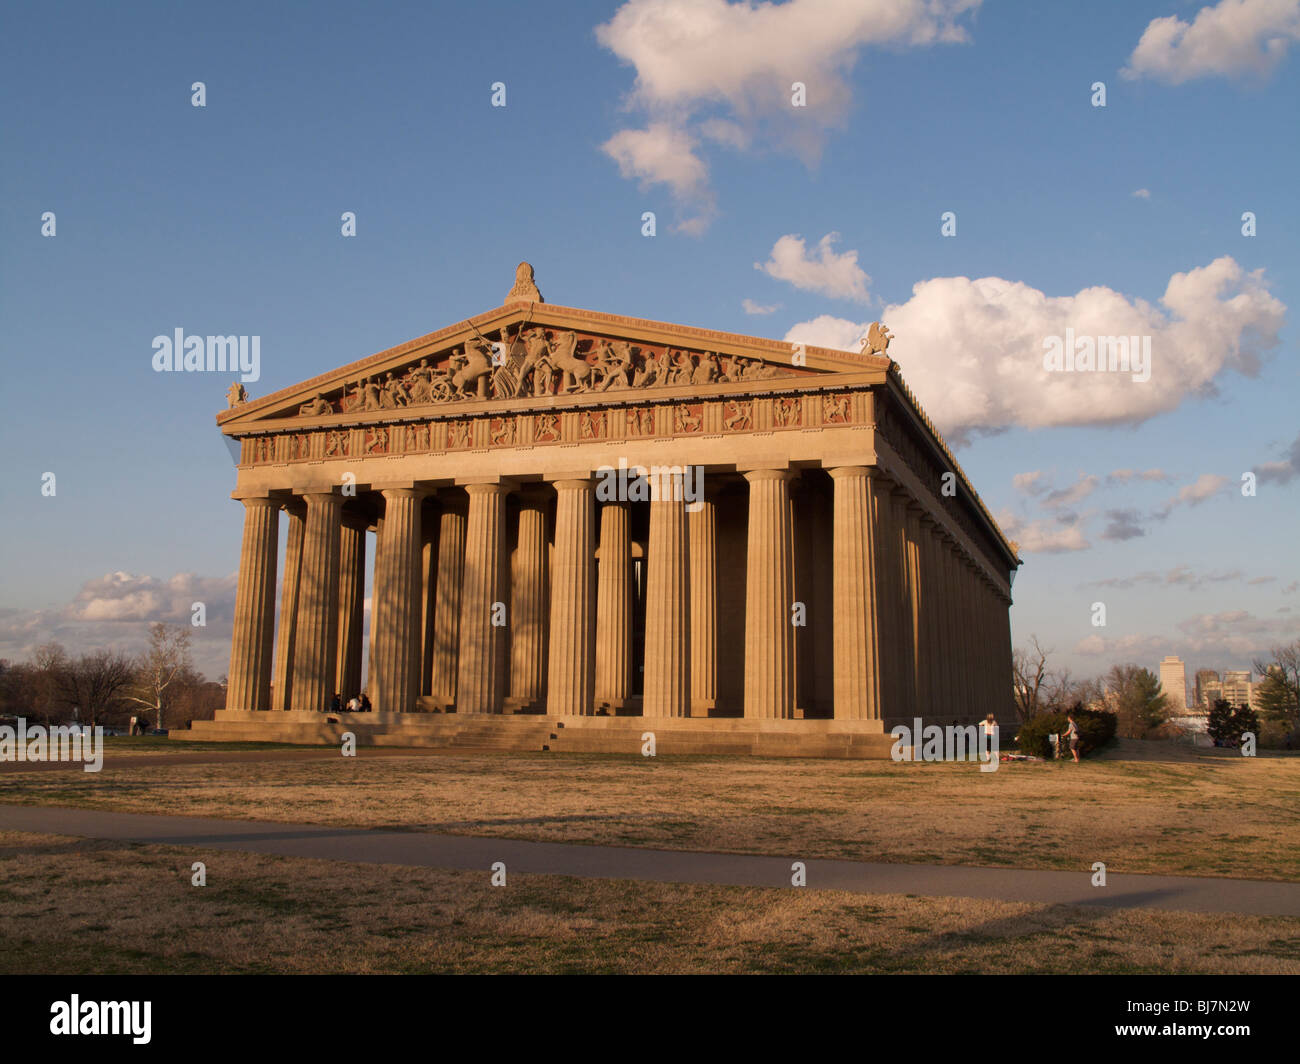 Full scale replica of the Parthenon. Centennial Park, Nashville, Tennessee. Stock Photo